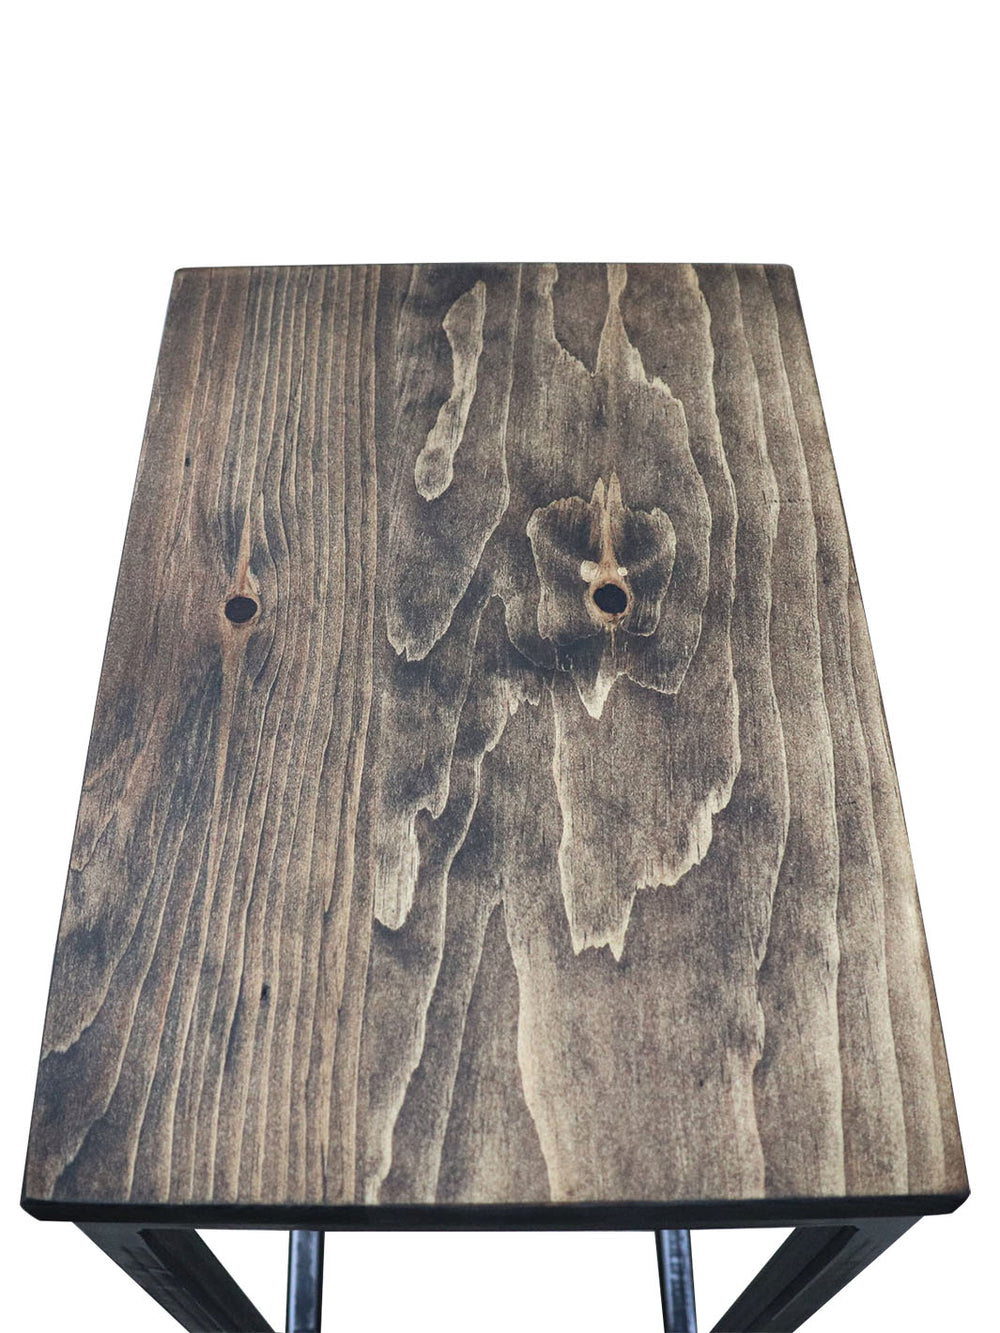 Pine Wood & Metal Industrial Side C Table Earthly Comfort Side Table 765-1